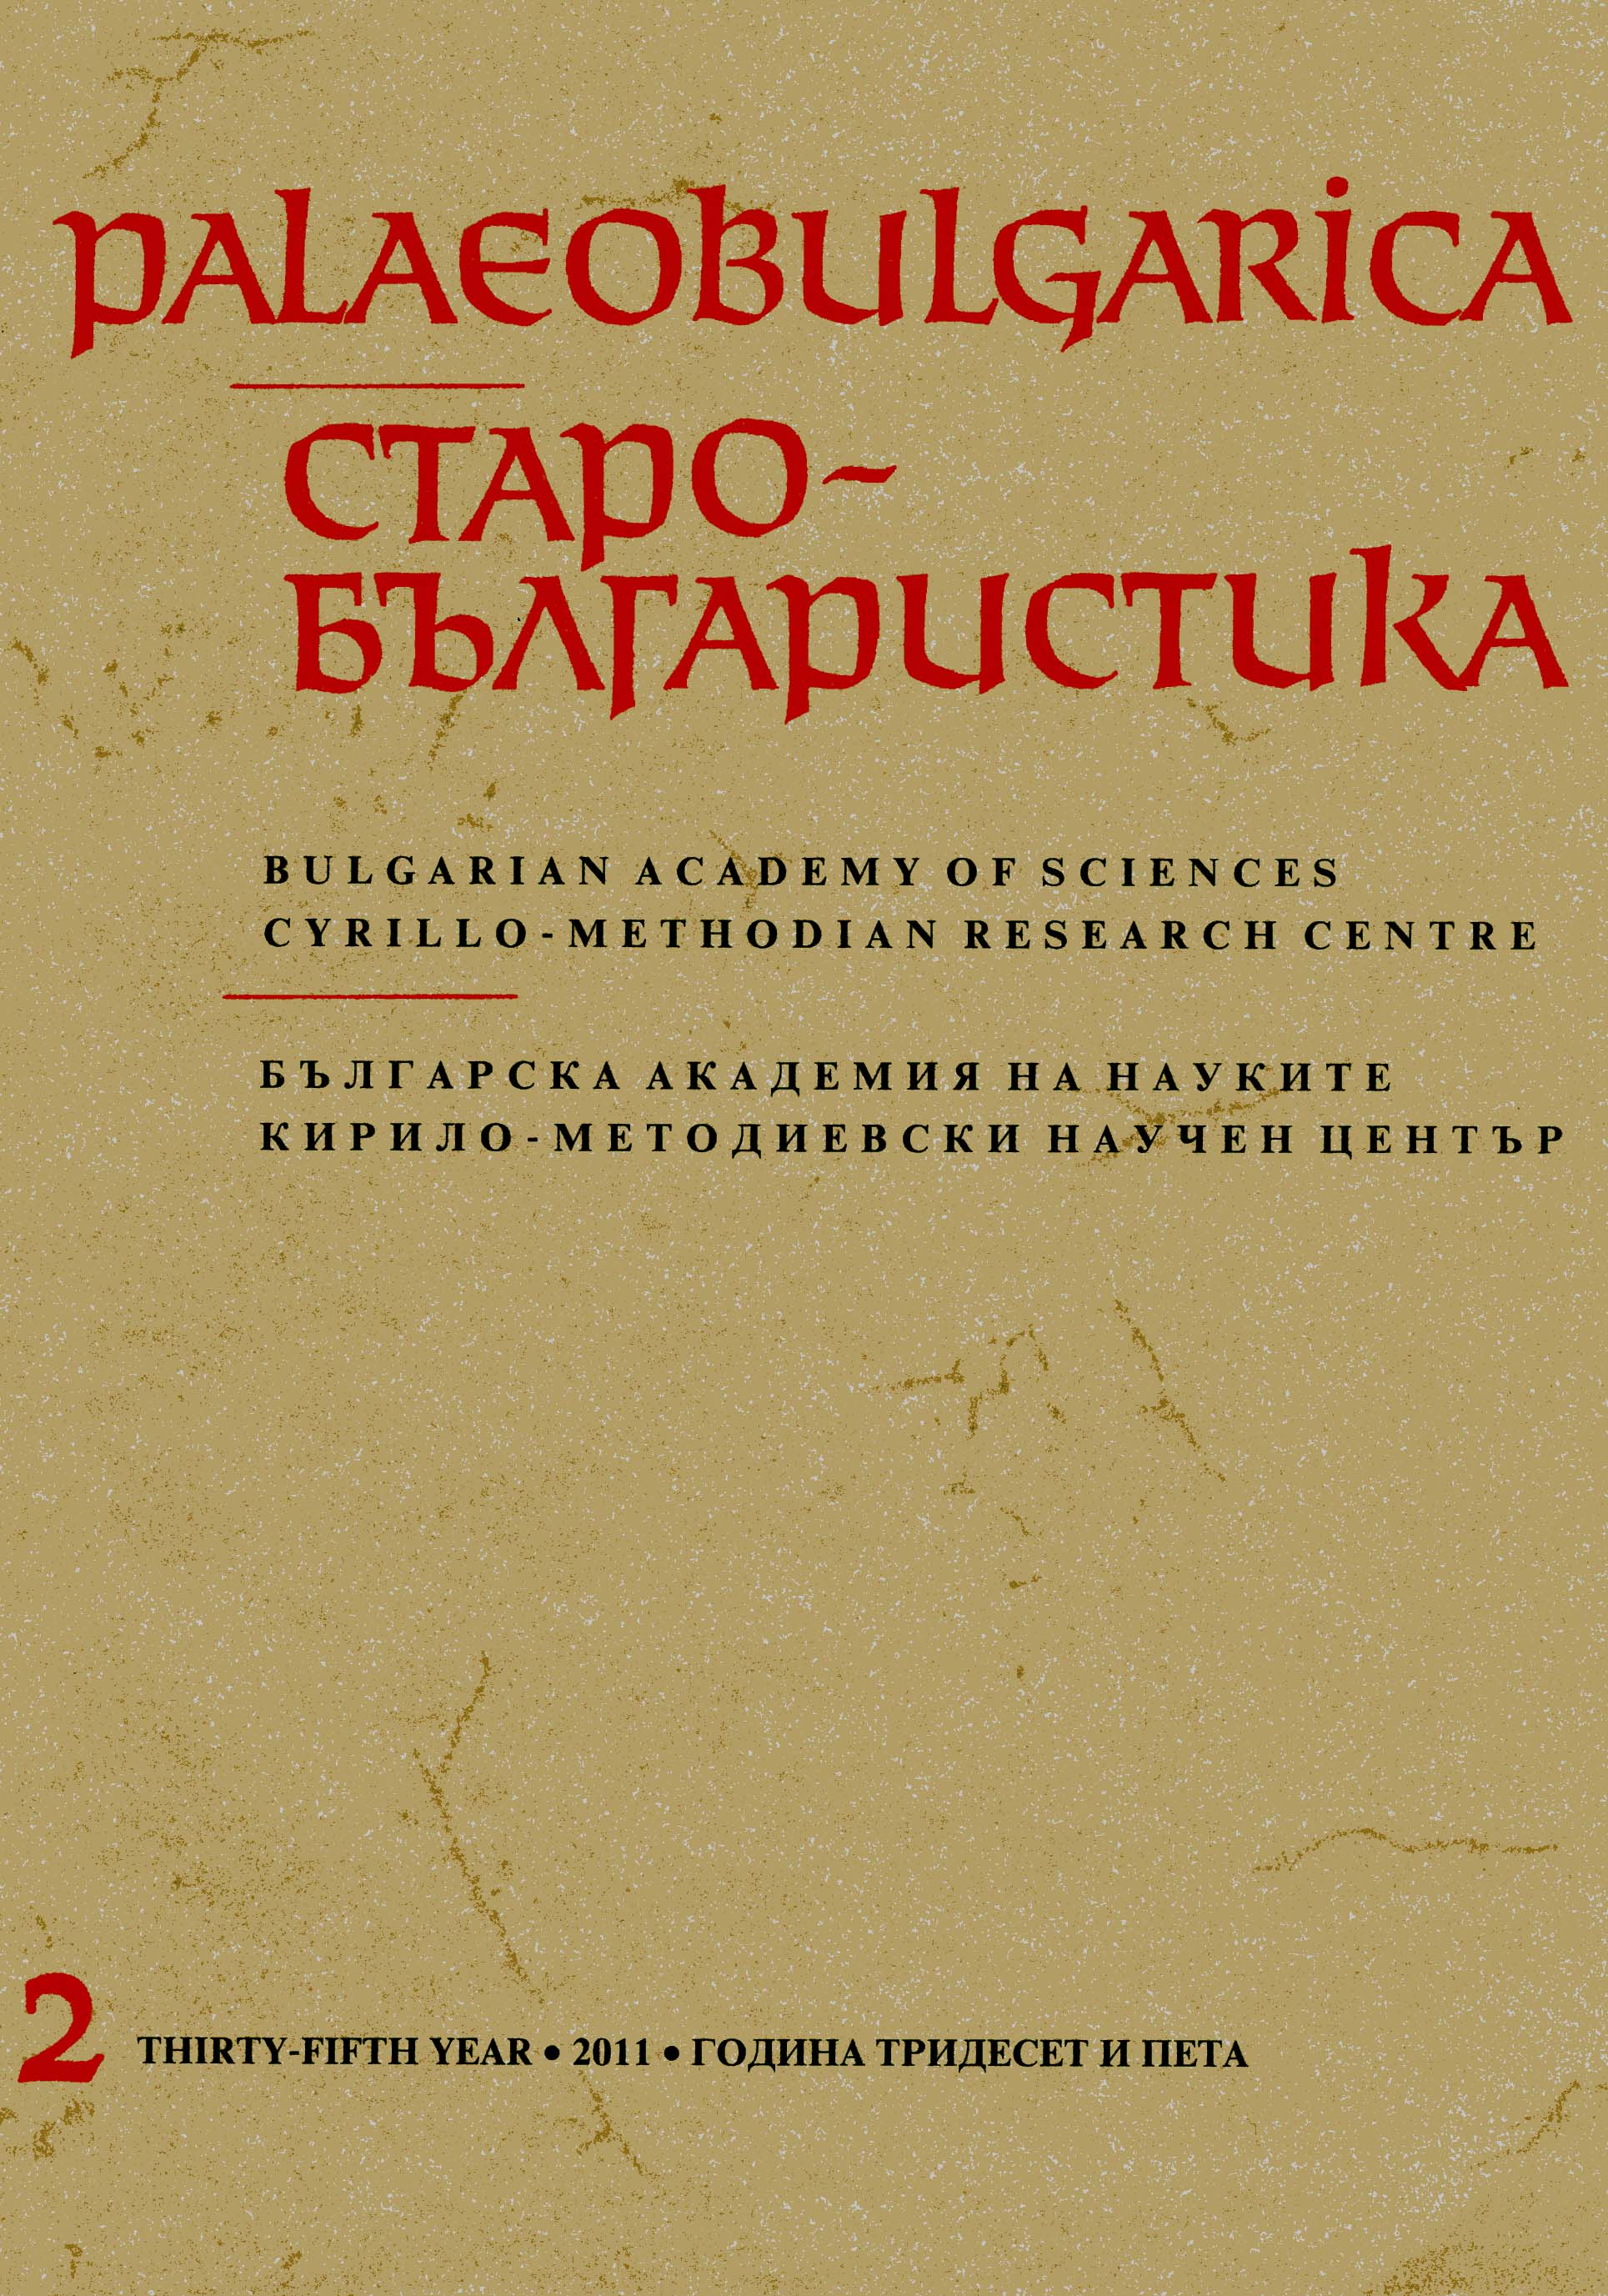 – Tarnovgrad – Spiritual and Literary Center in the 13th Century Cover Image